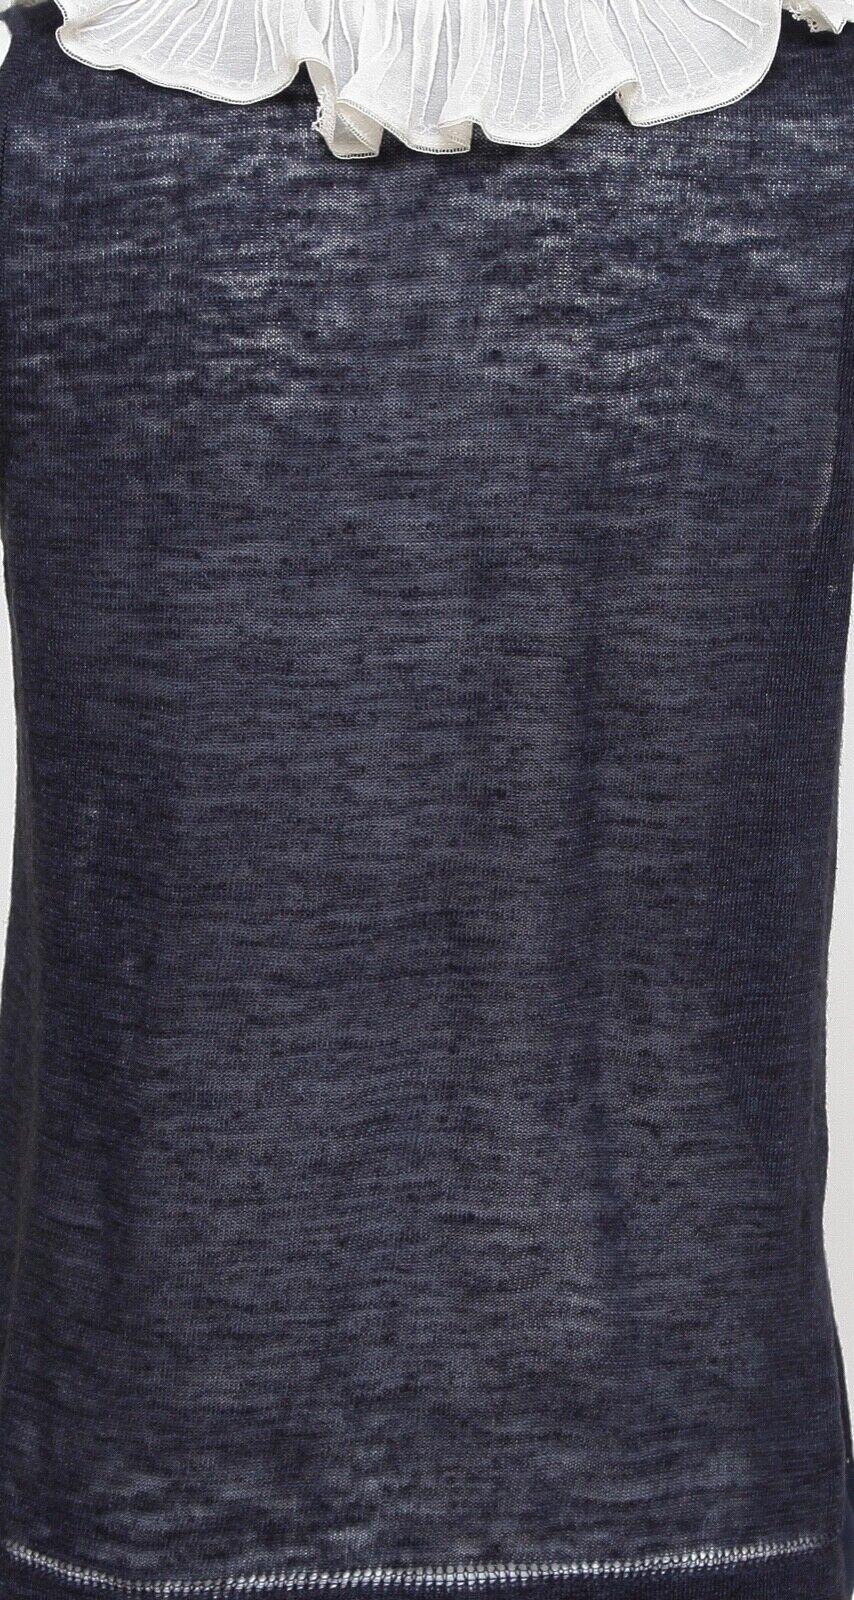 CHLOE Sleeveless Top Shirt Sleeveless Navy Ivory Ruffle Henley XS 2007 For Sale 2